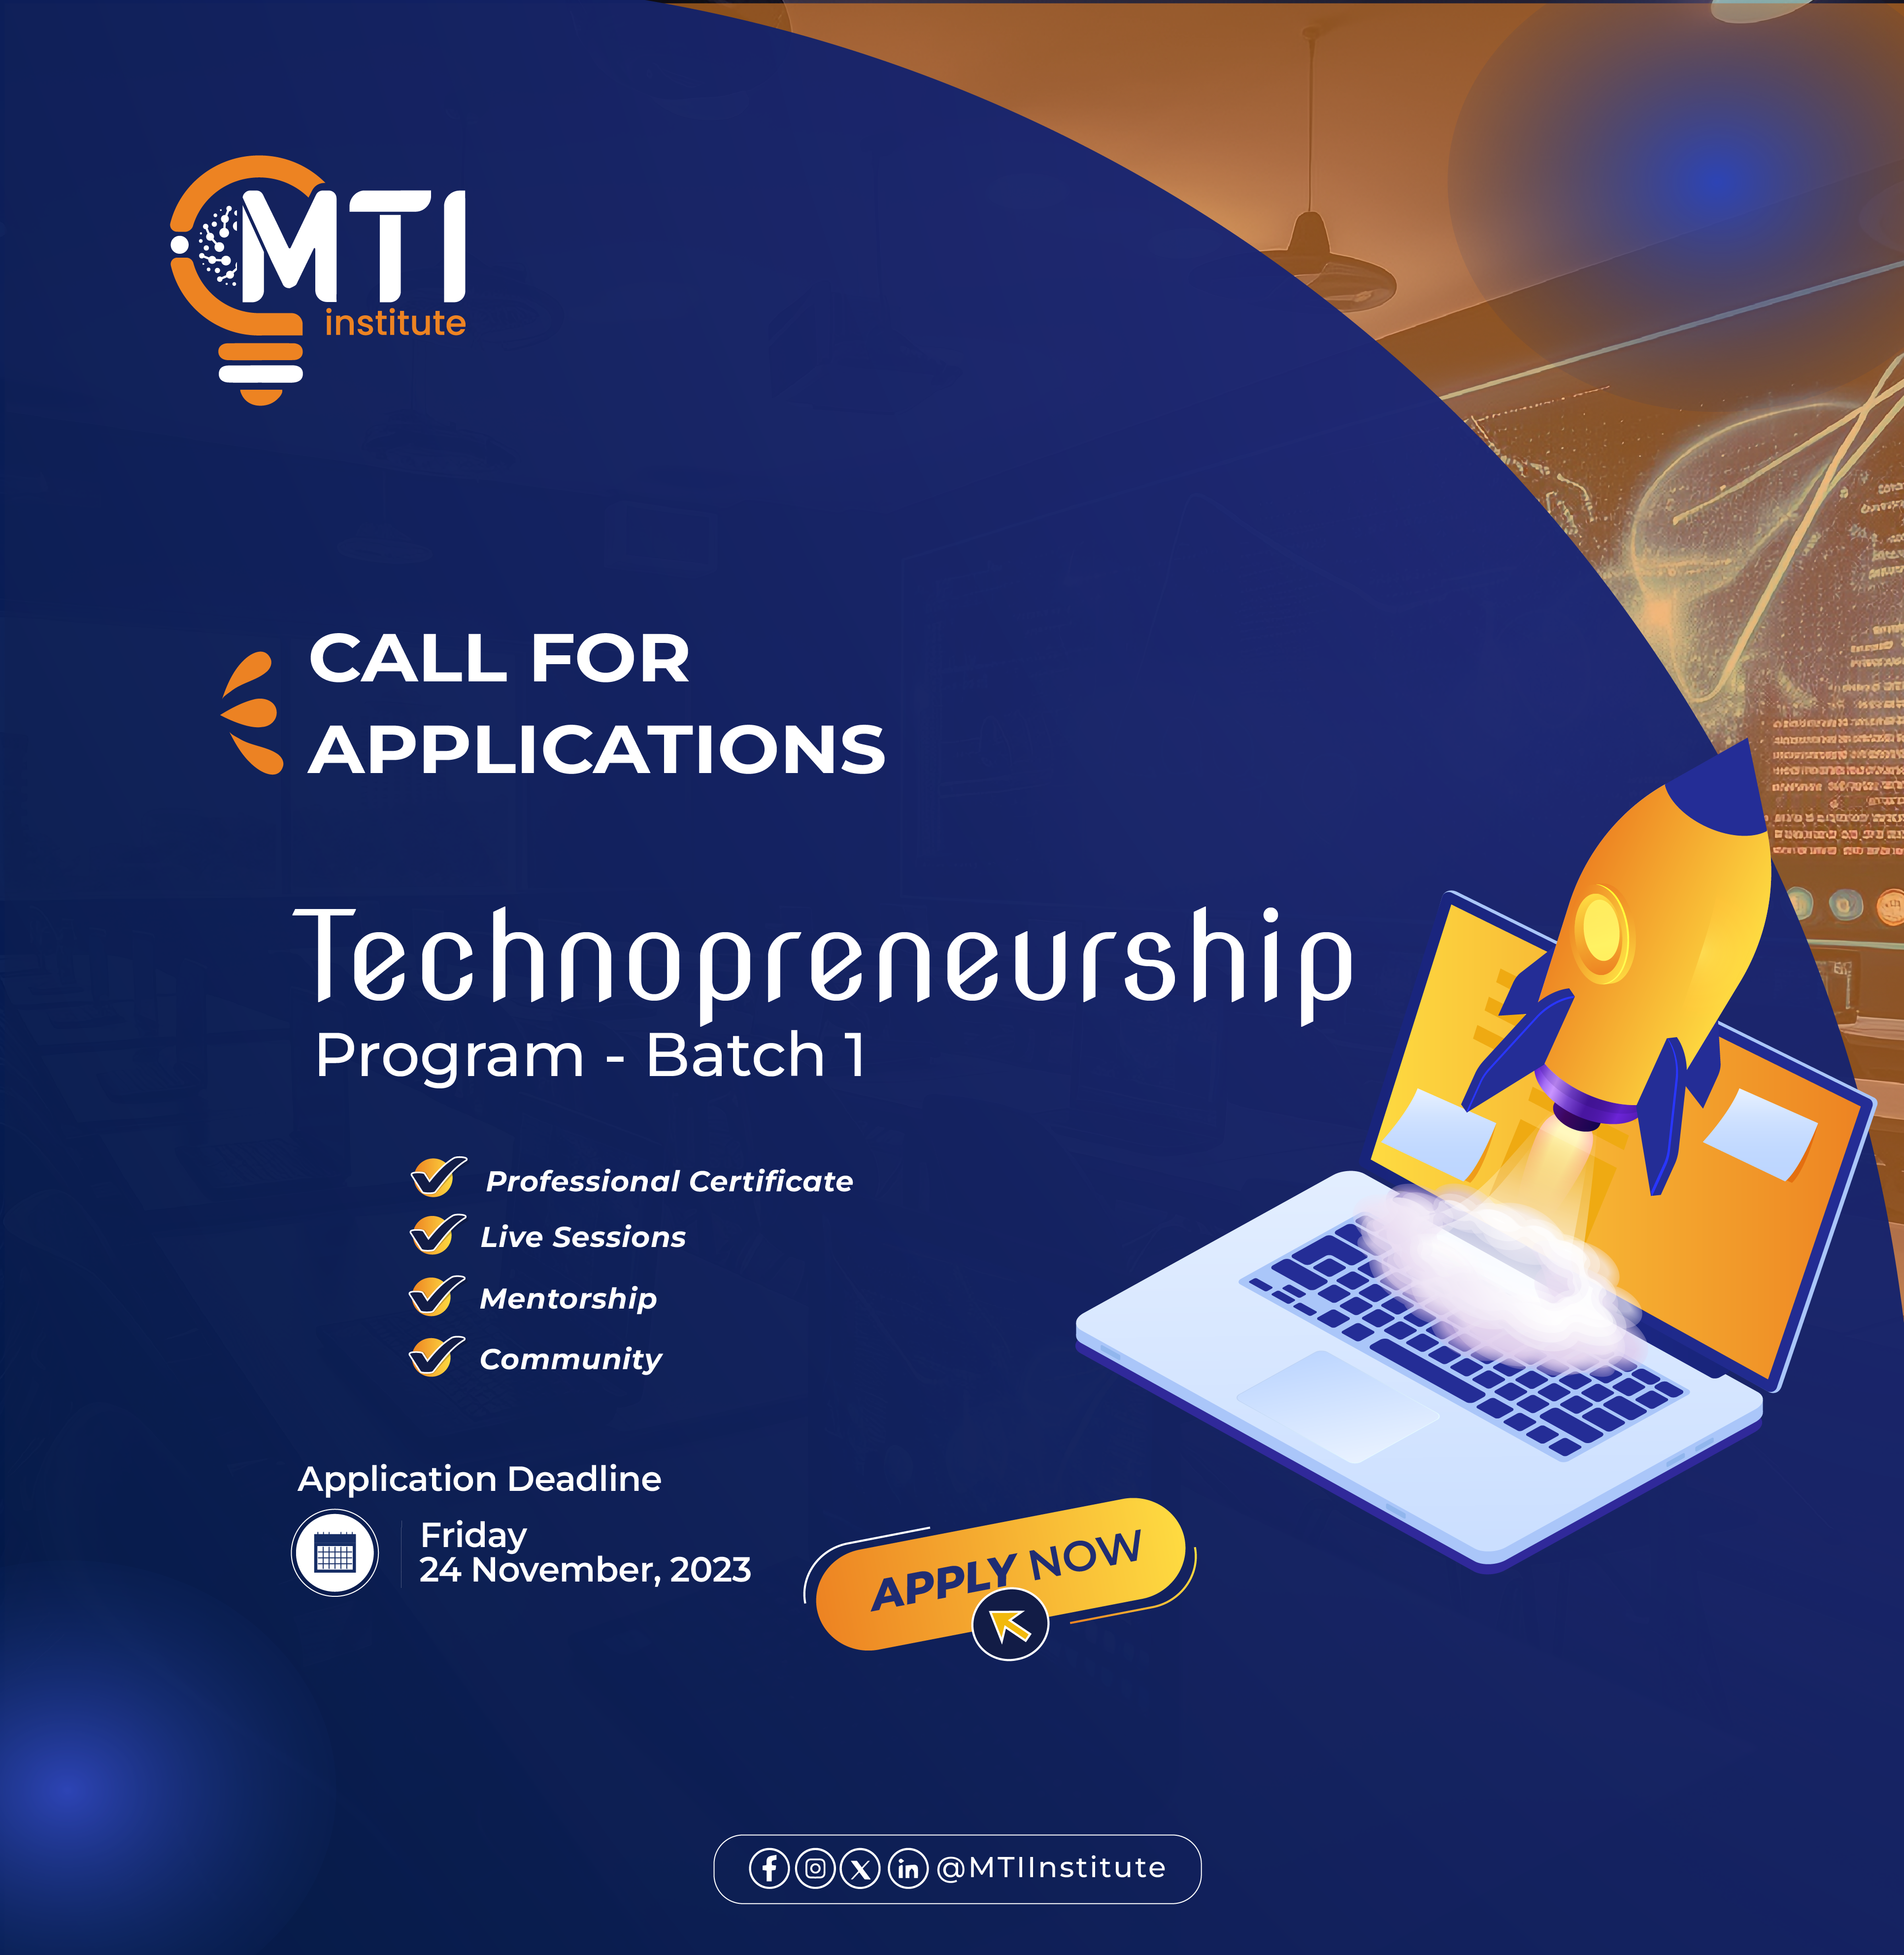 Call for Technopreneurship Program Batch 1 Applications